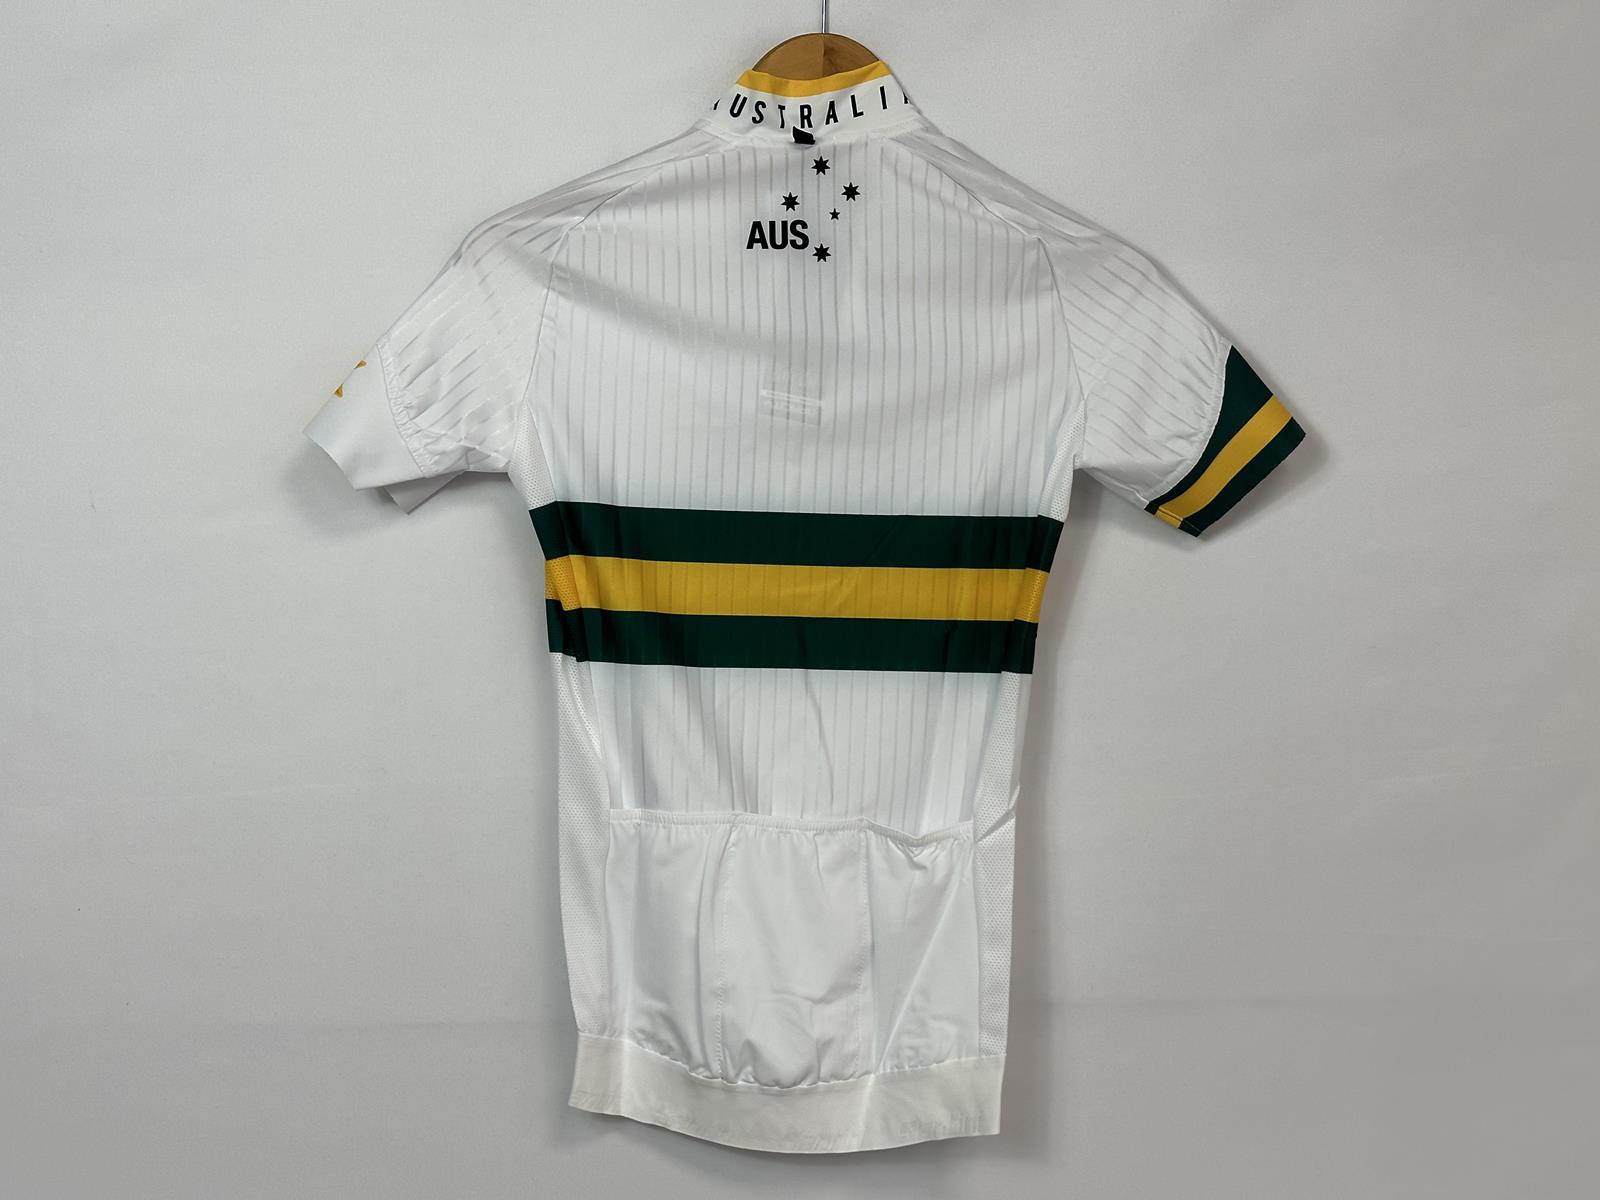 Camisa Sleek Plus Aero da equipe australiana de ciclismo